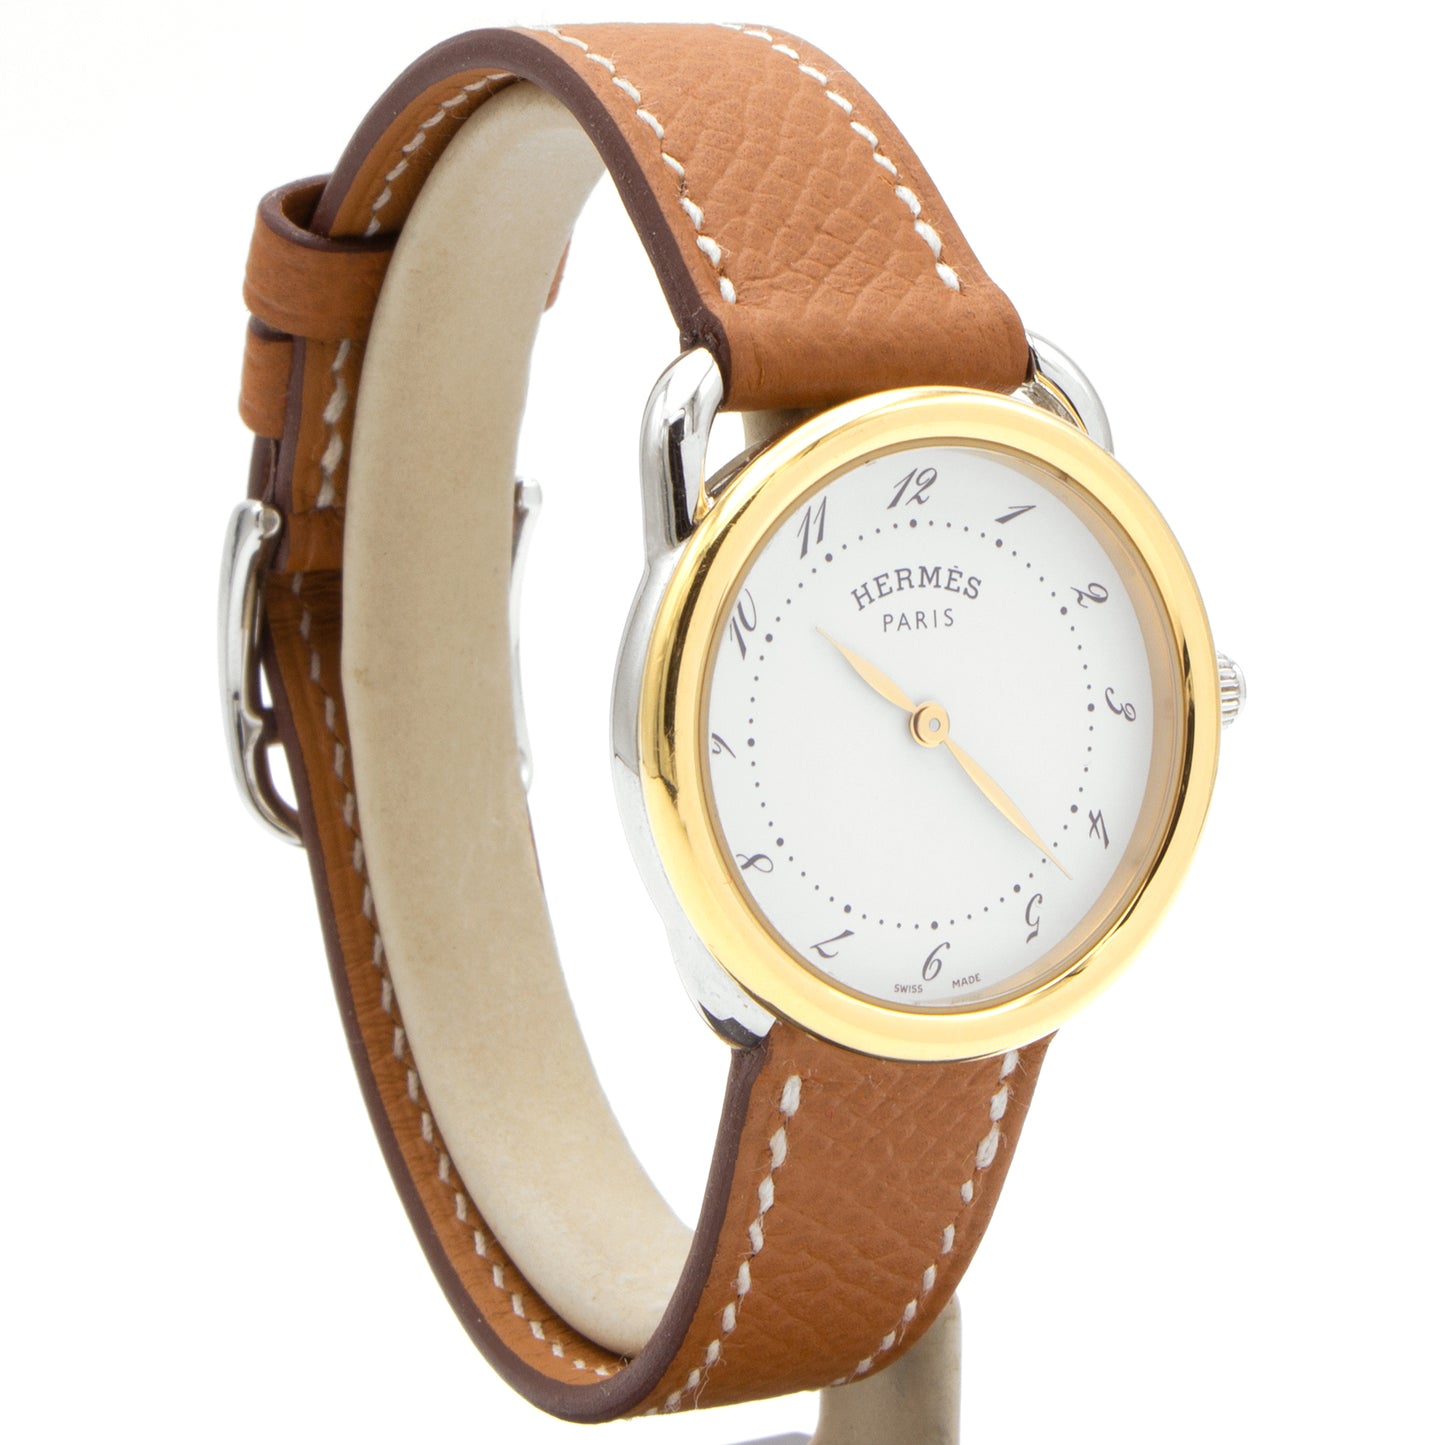 Hermès Arceau AR5.220a watch